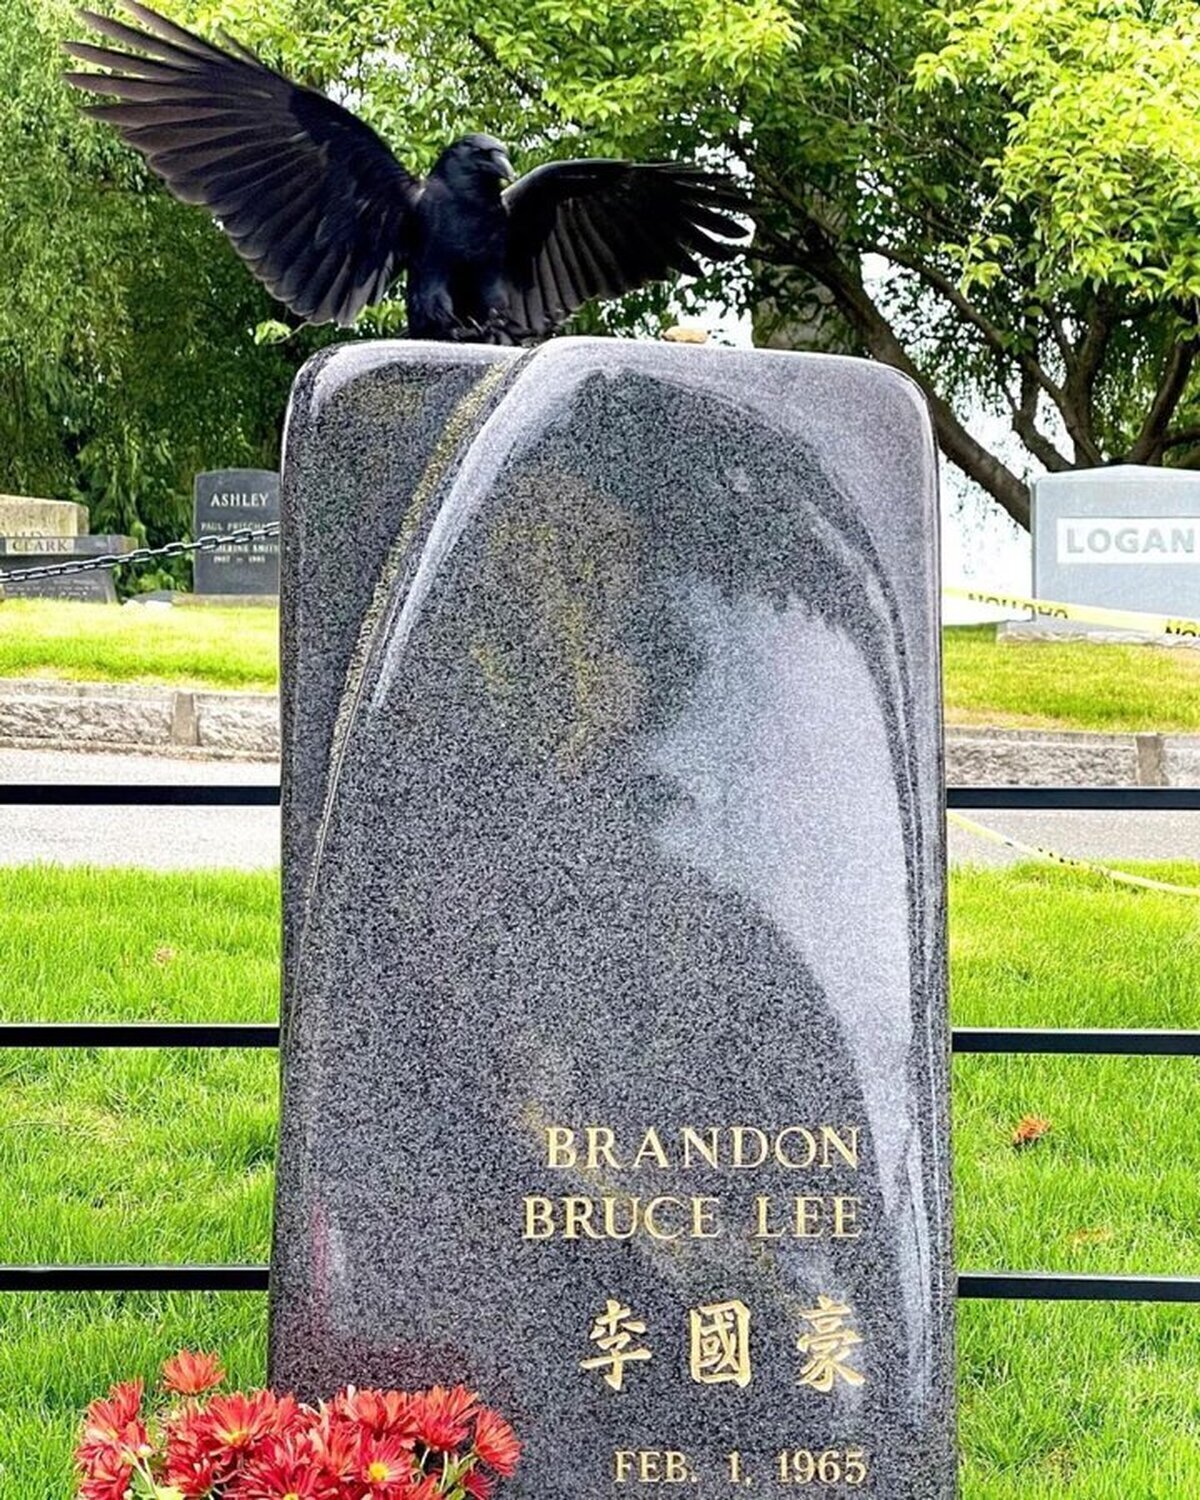 Un cuervo se posa sobre la tumba de Brandon Lee.La foto PERFECTA existe